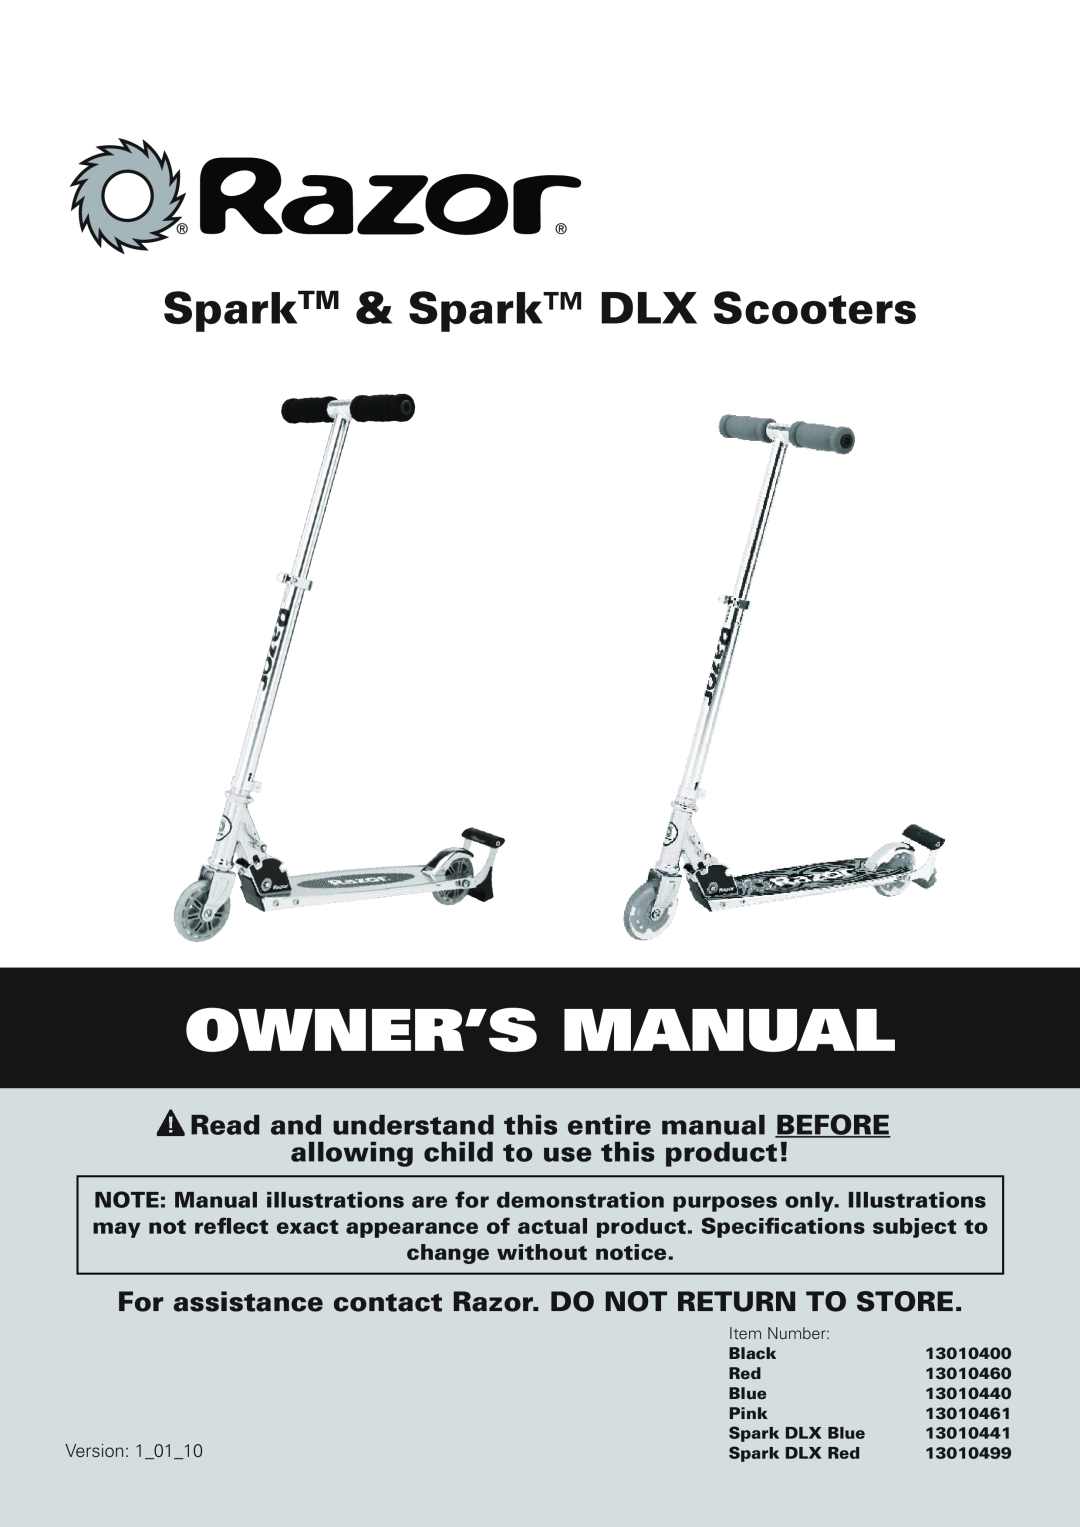 Razor 13010461, 13010499, 13010460, 13010400, 13010441 owner manual Owner’s Manual, SparkTM & Spark DLX Scooters, Version 